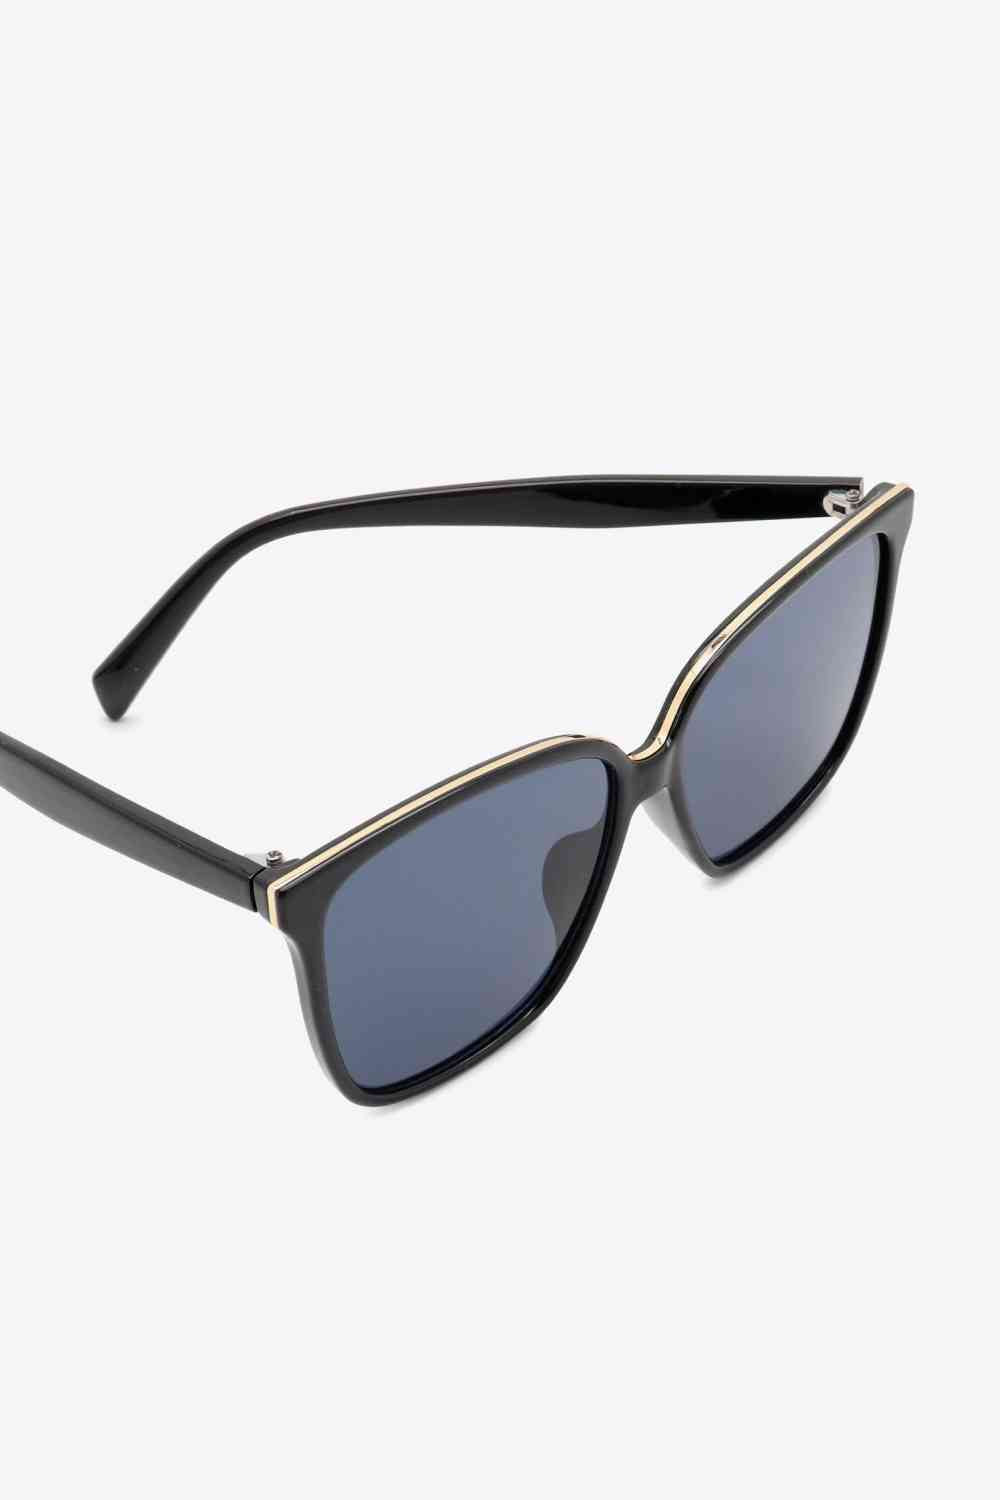 TEEK - Dusty Blue Wayfarer Sunglasses EYEGLASSES TEEK Trend   